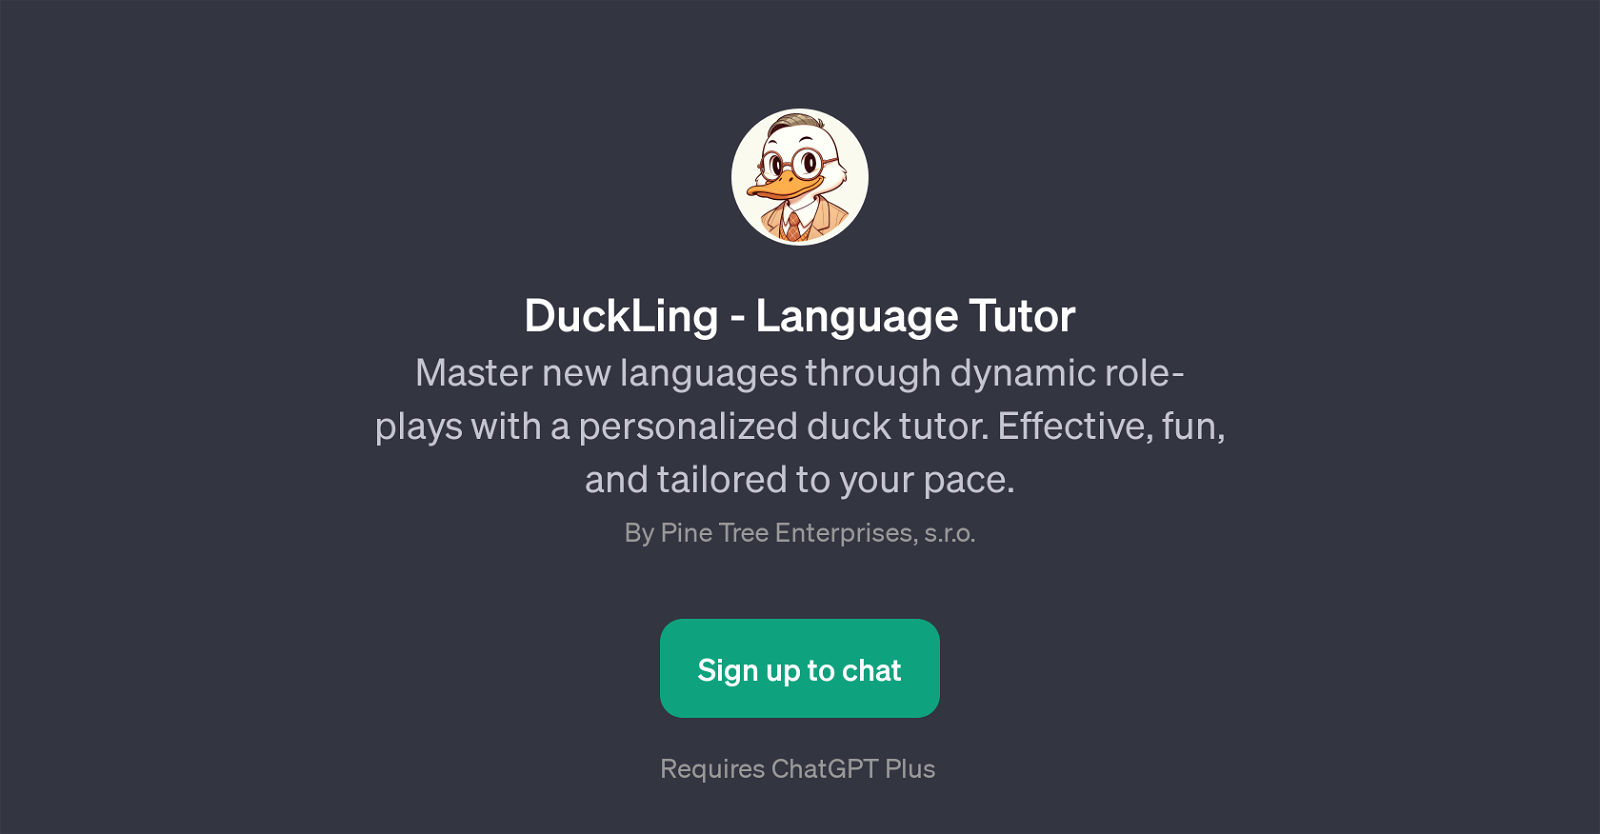 DuckLing - Language Tutor website